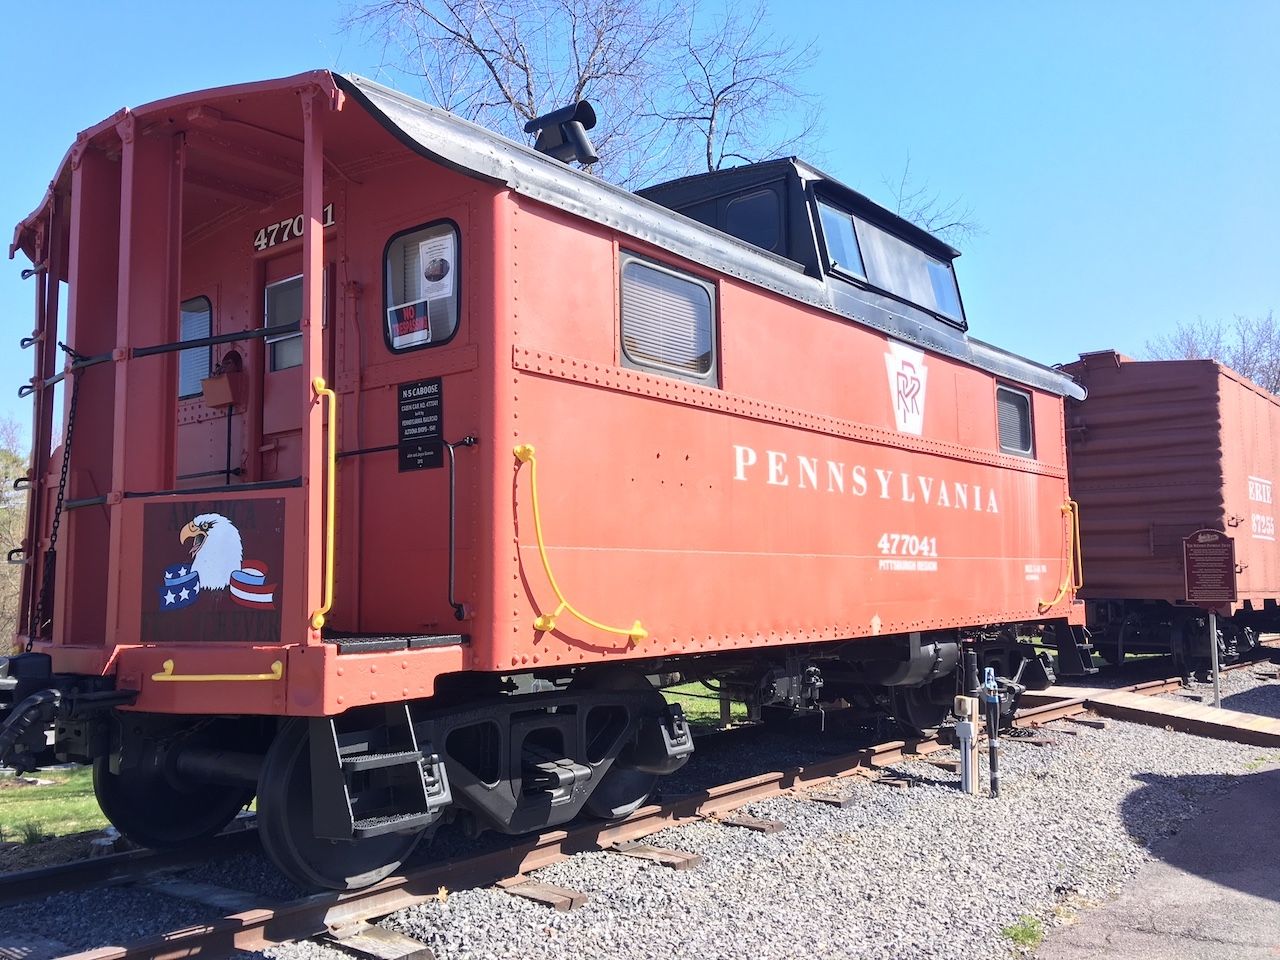 Red train car turned Airbnb on train tracks